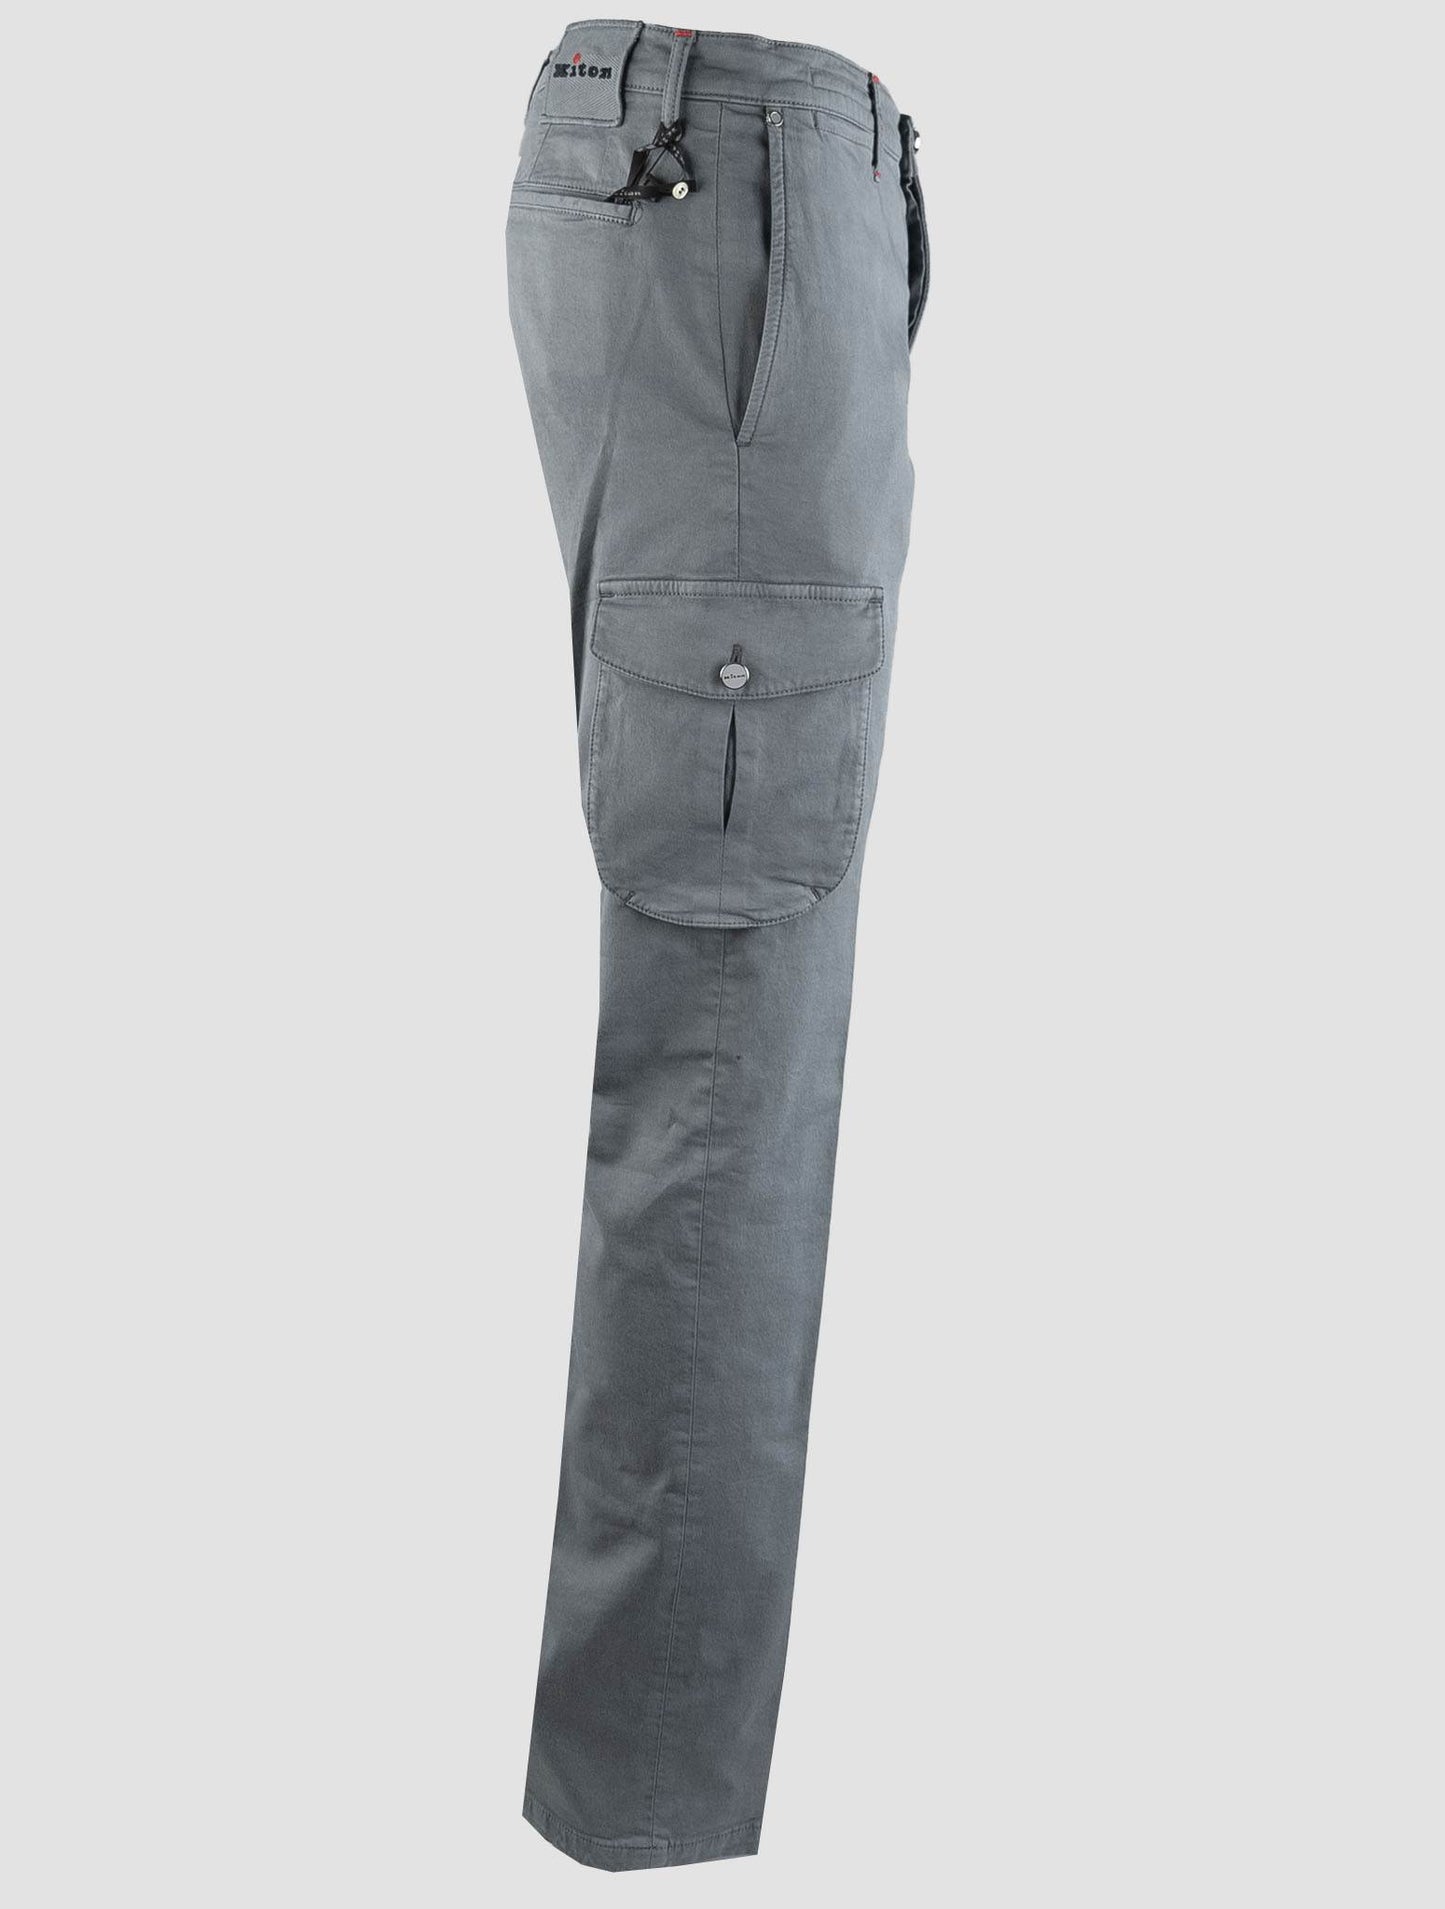 Pantalones cargo de algodón gris claro de Kiton Ea